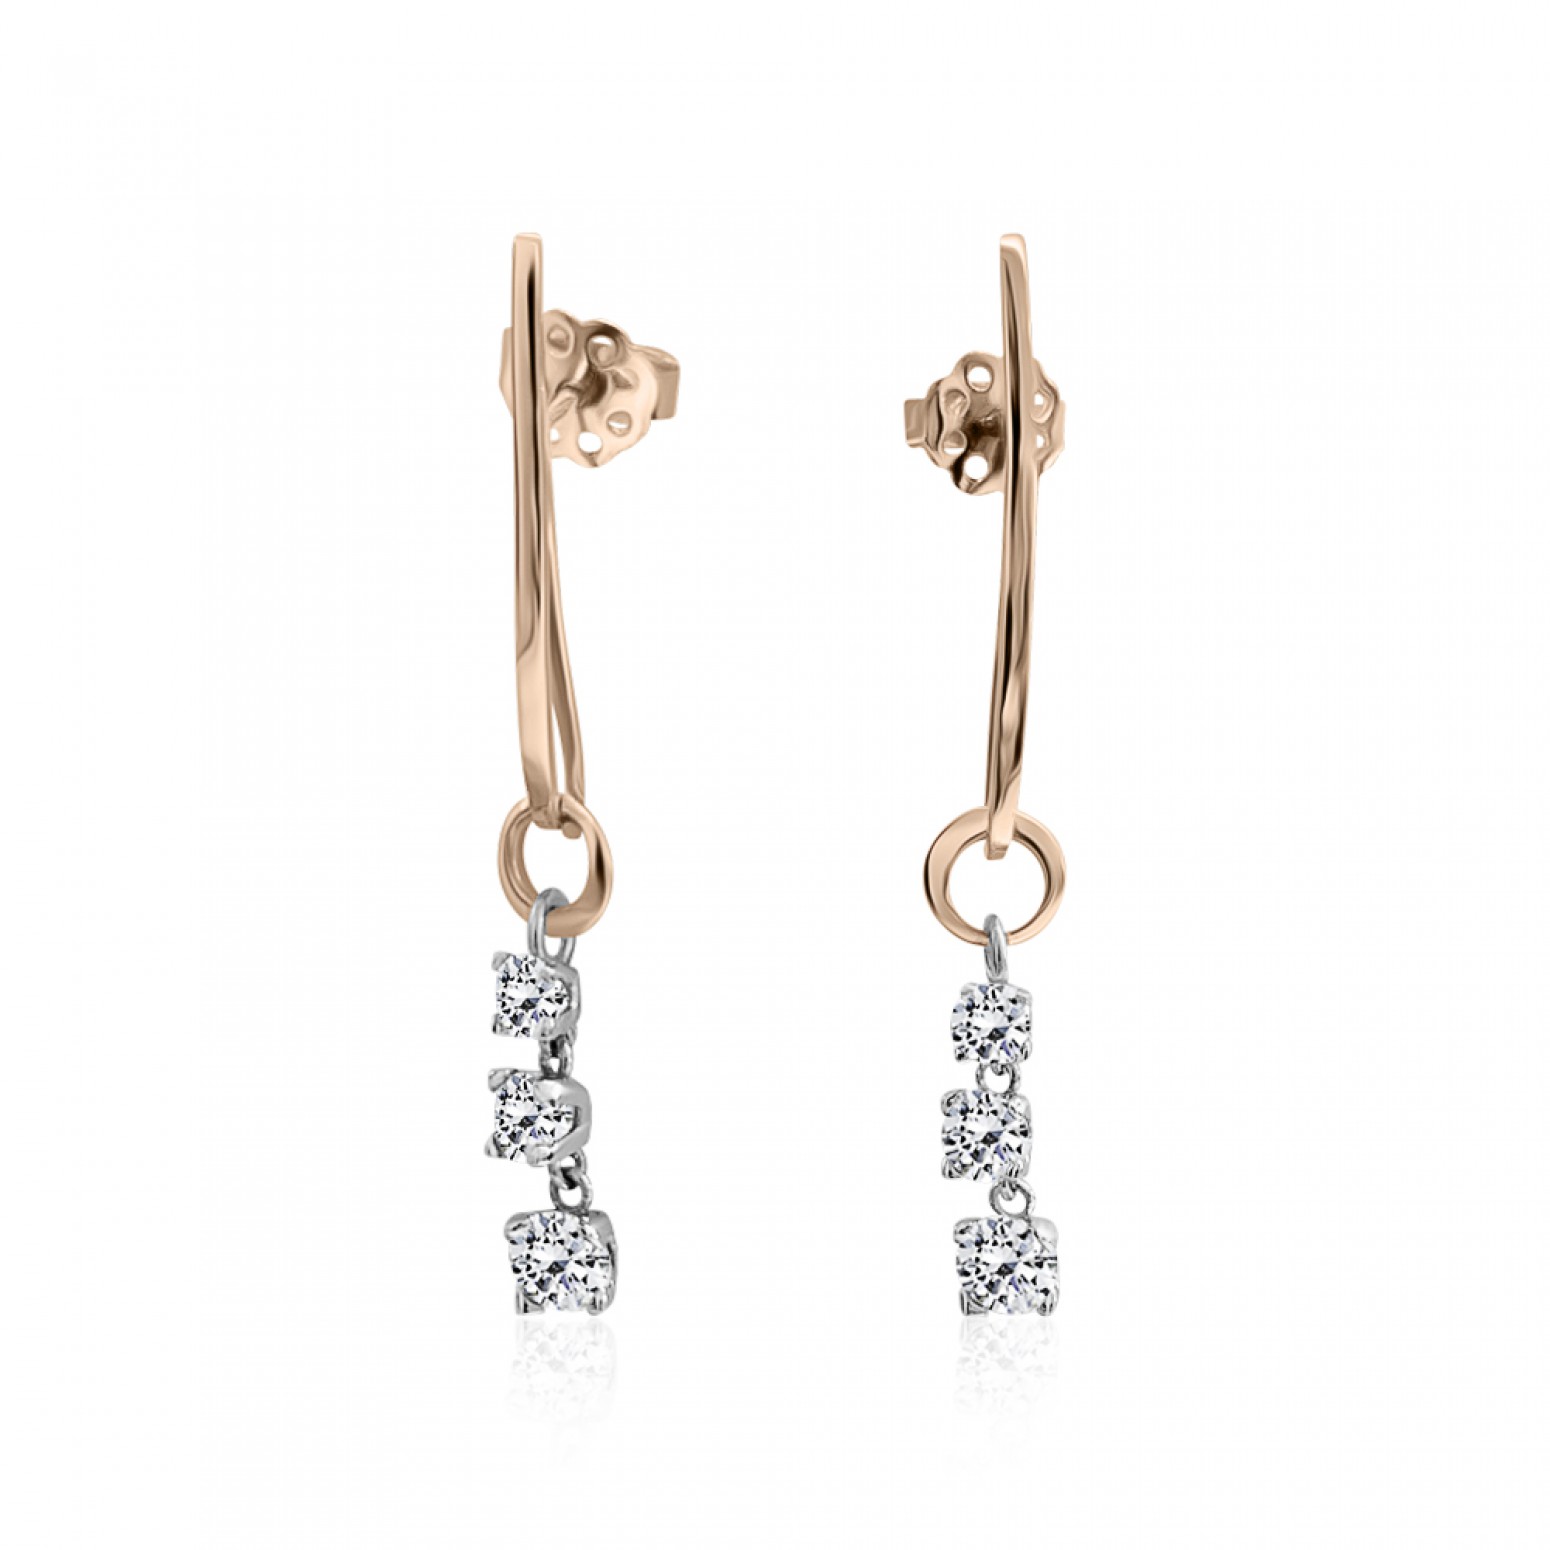 Dangle earrings K14 pink and white gold with zircon, sk1636 EARRINGS Κοσμηματα - chrilia.gr